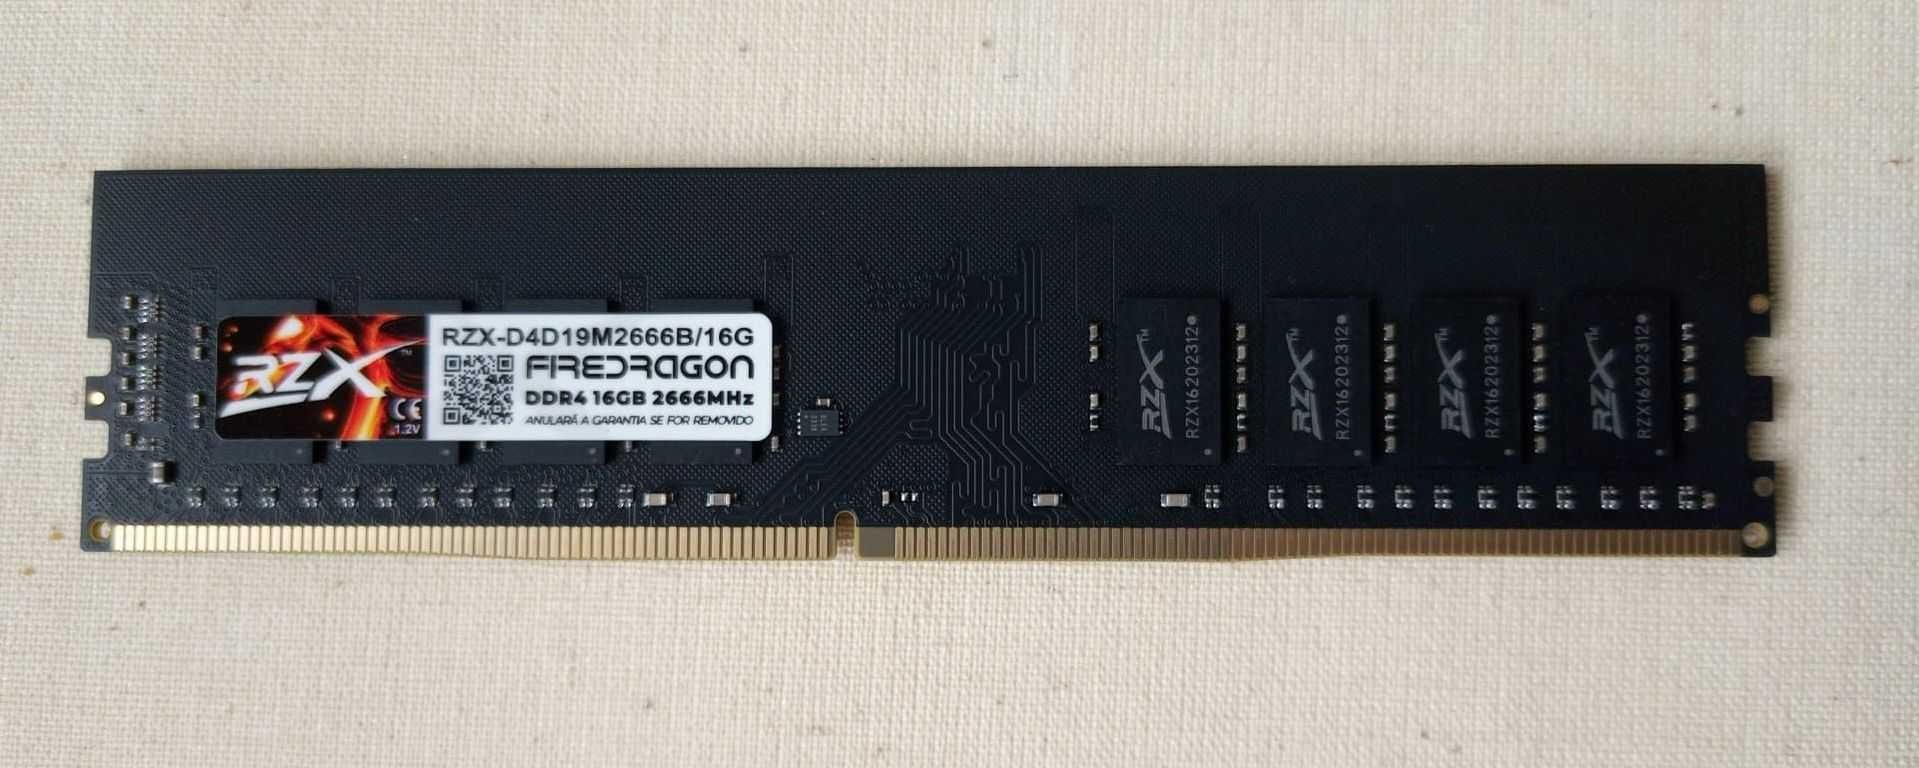 Оперативная память для ПК RZX DIMM DDR4 16 GB 2666 MHz